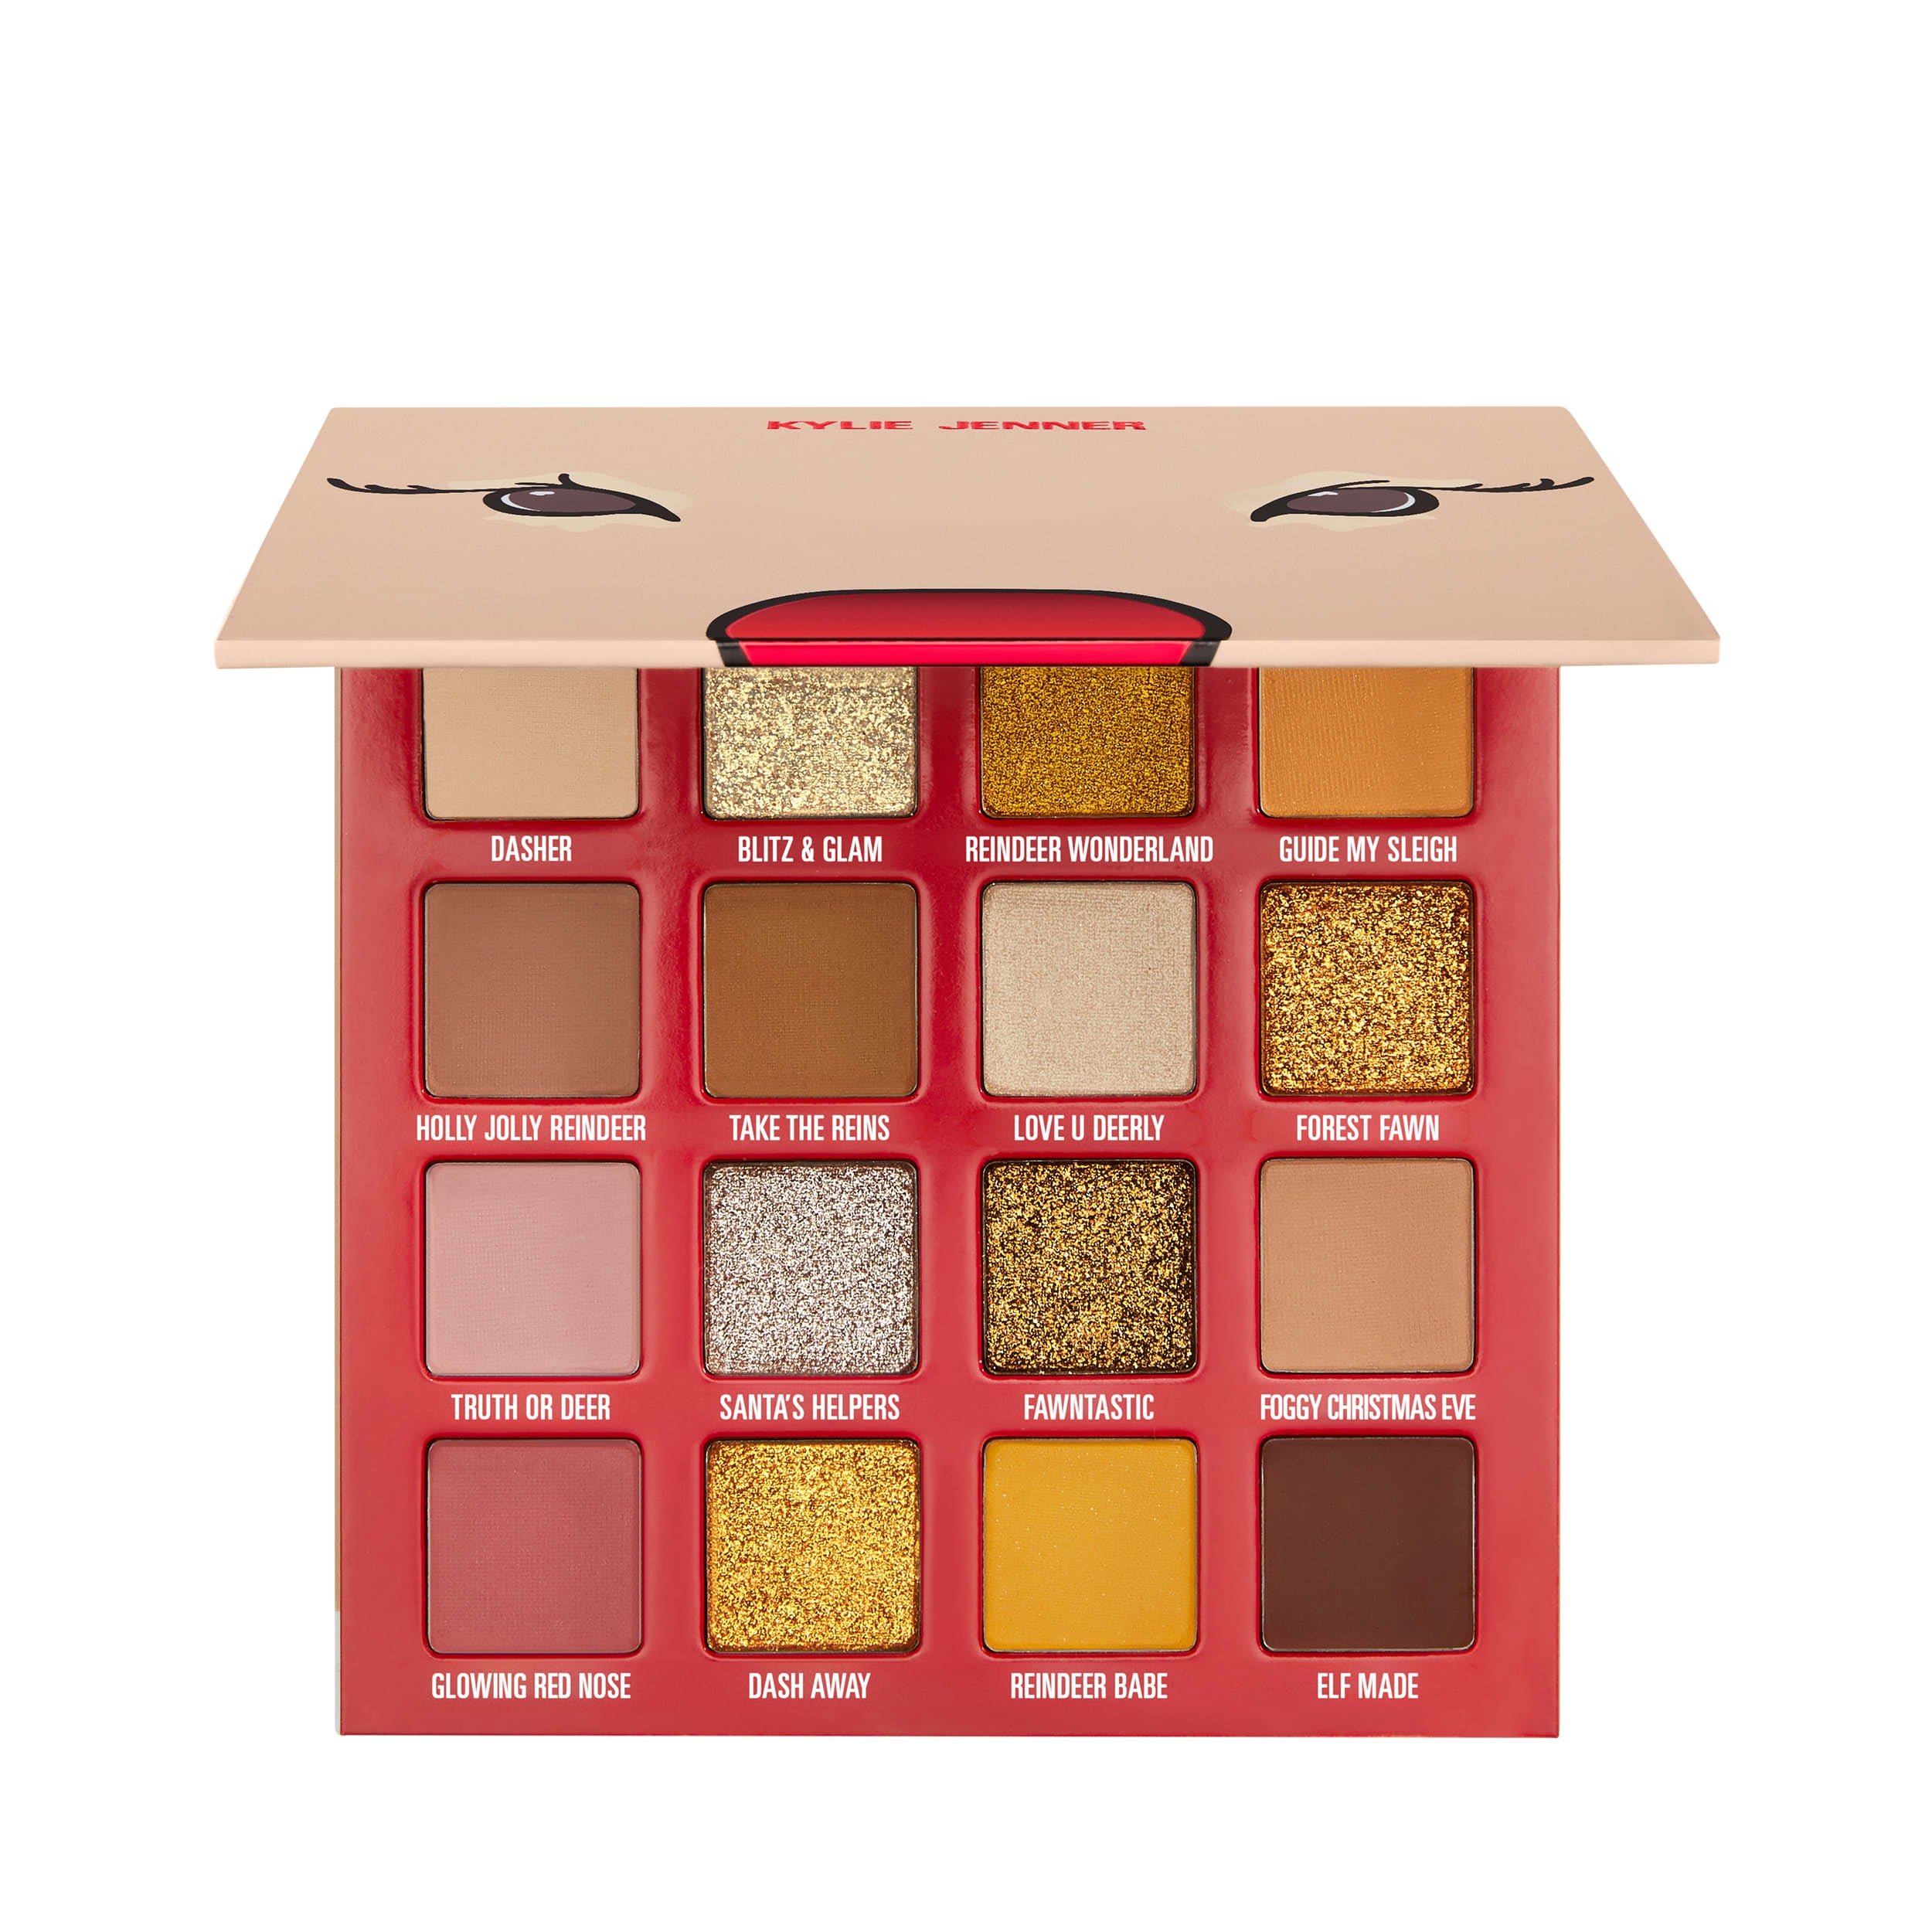 Port Udsigt fordel Holiday Collection Pressed Powder Palette | Kylie Cosmetics by Kylie Jenner